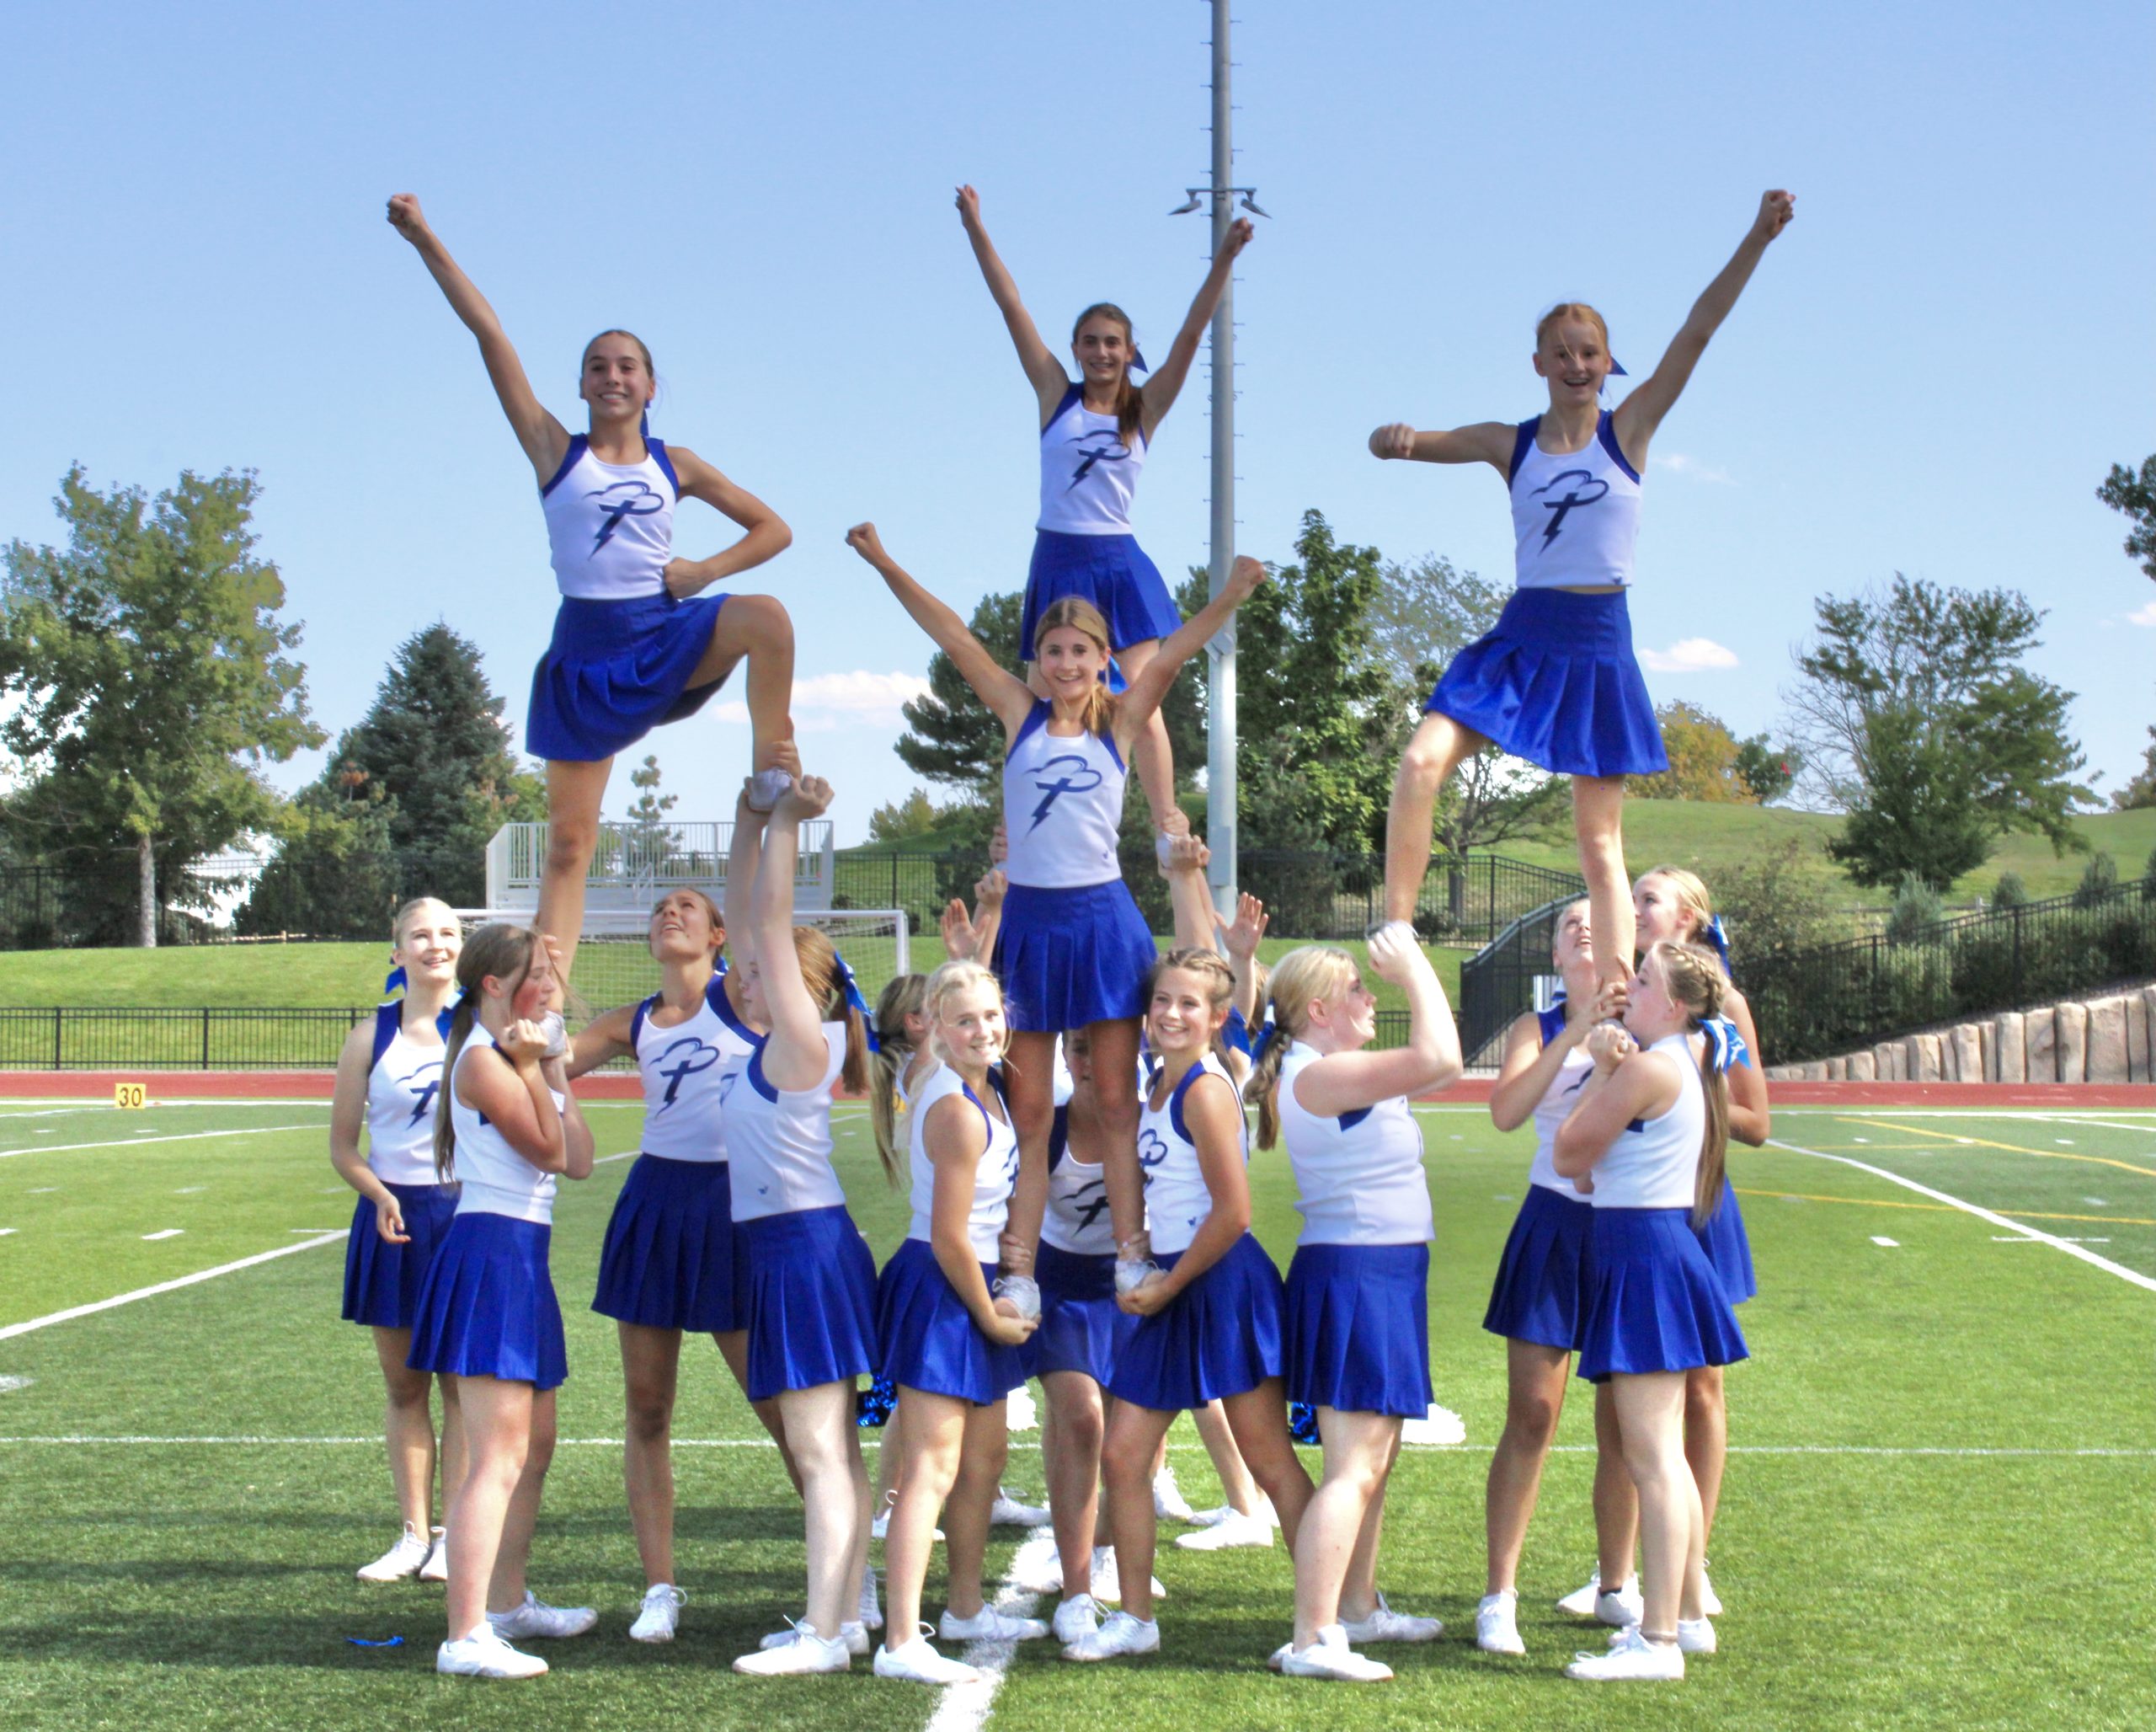 High School Cheerleading is Back! - Denver Christian School (DCS)